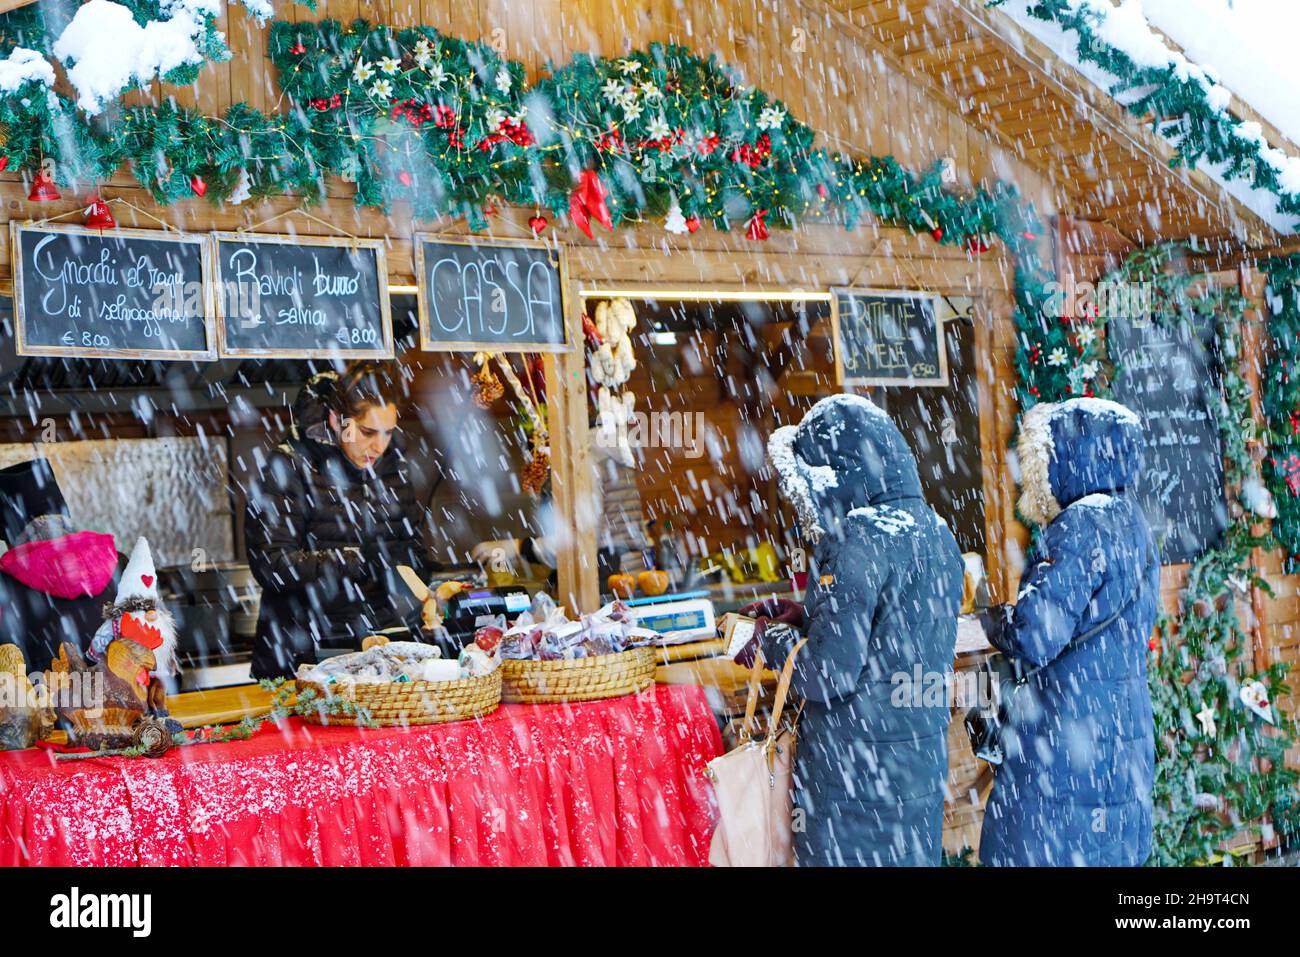 Traditional Christmas market under heavy snowfall. Aosta, Italy -December 2021 Stock Photo